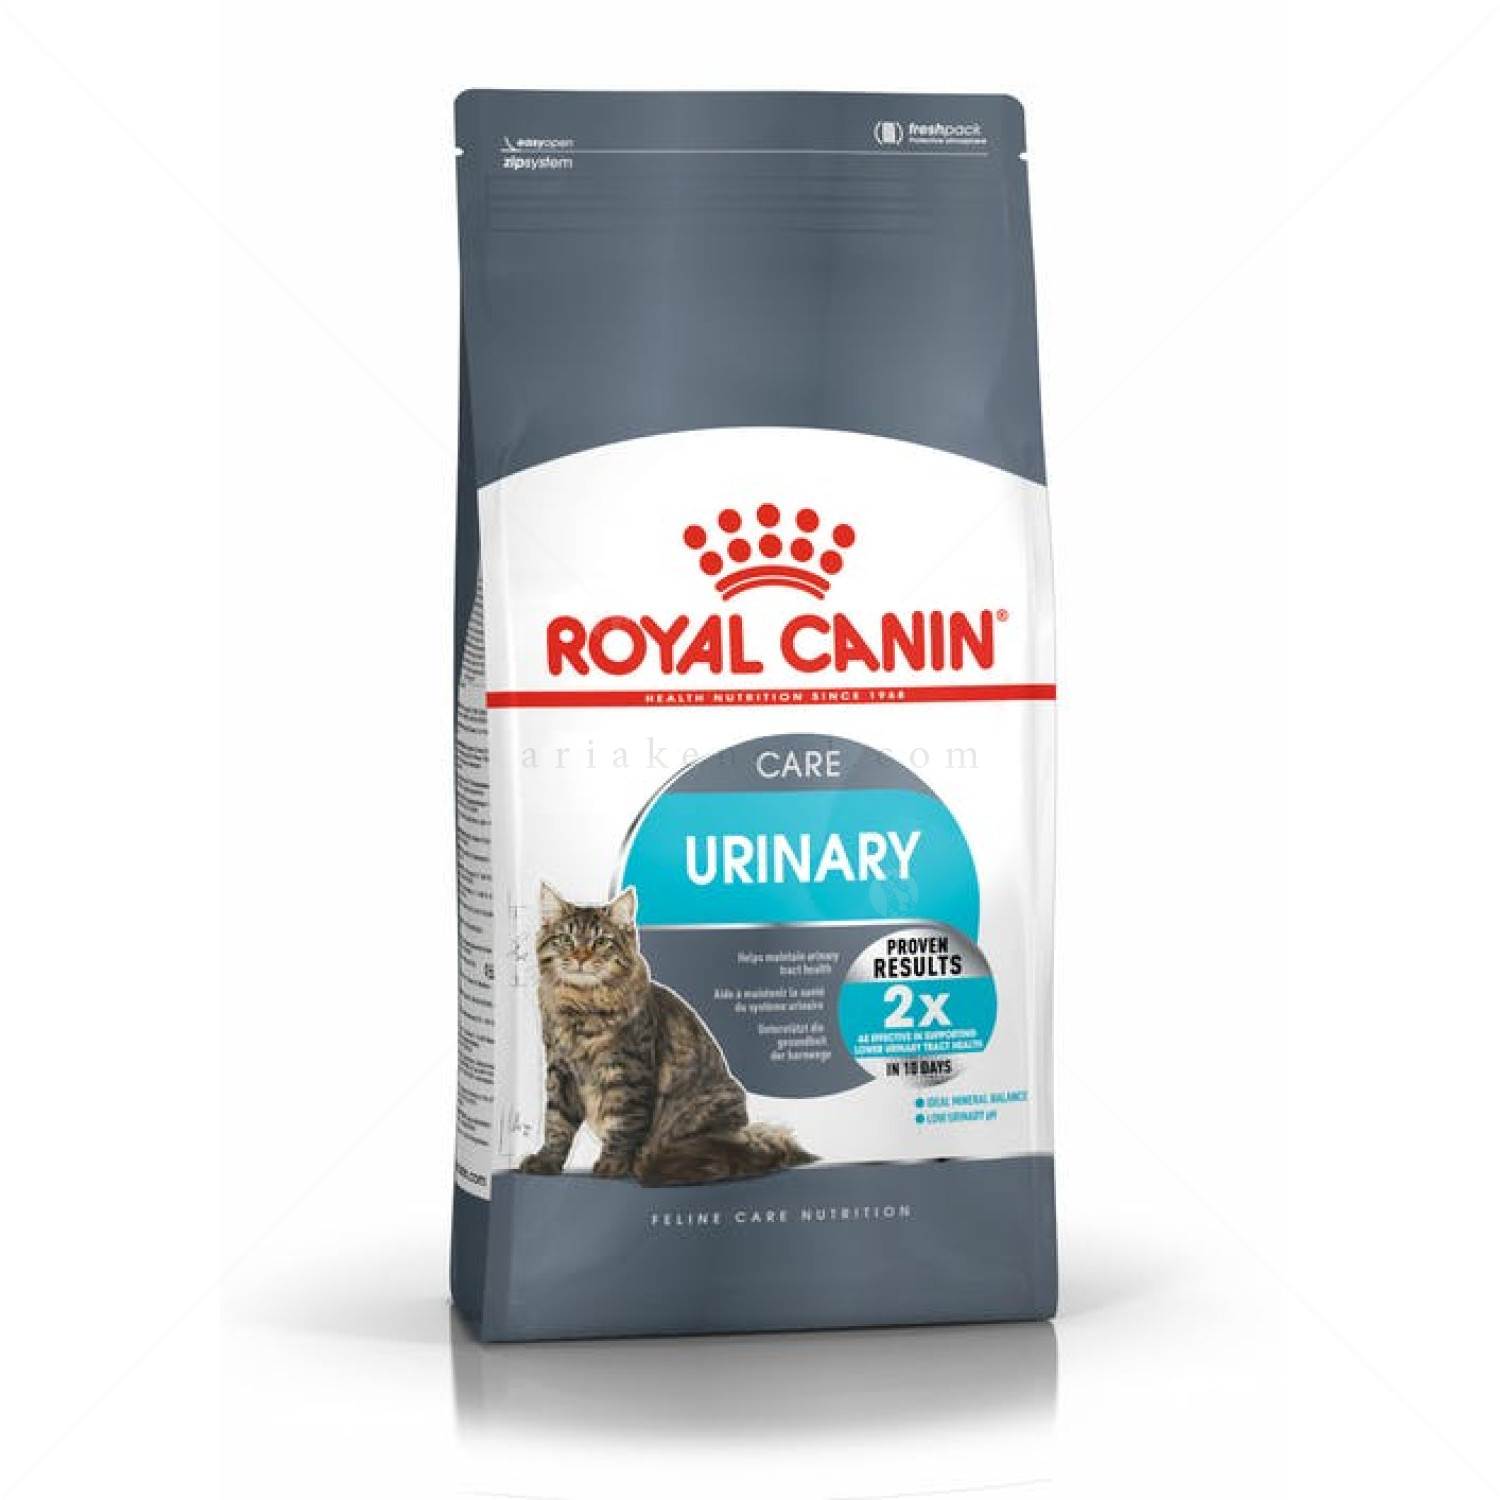 ROYAL CANIN® Urinary Care 10 кг.